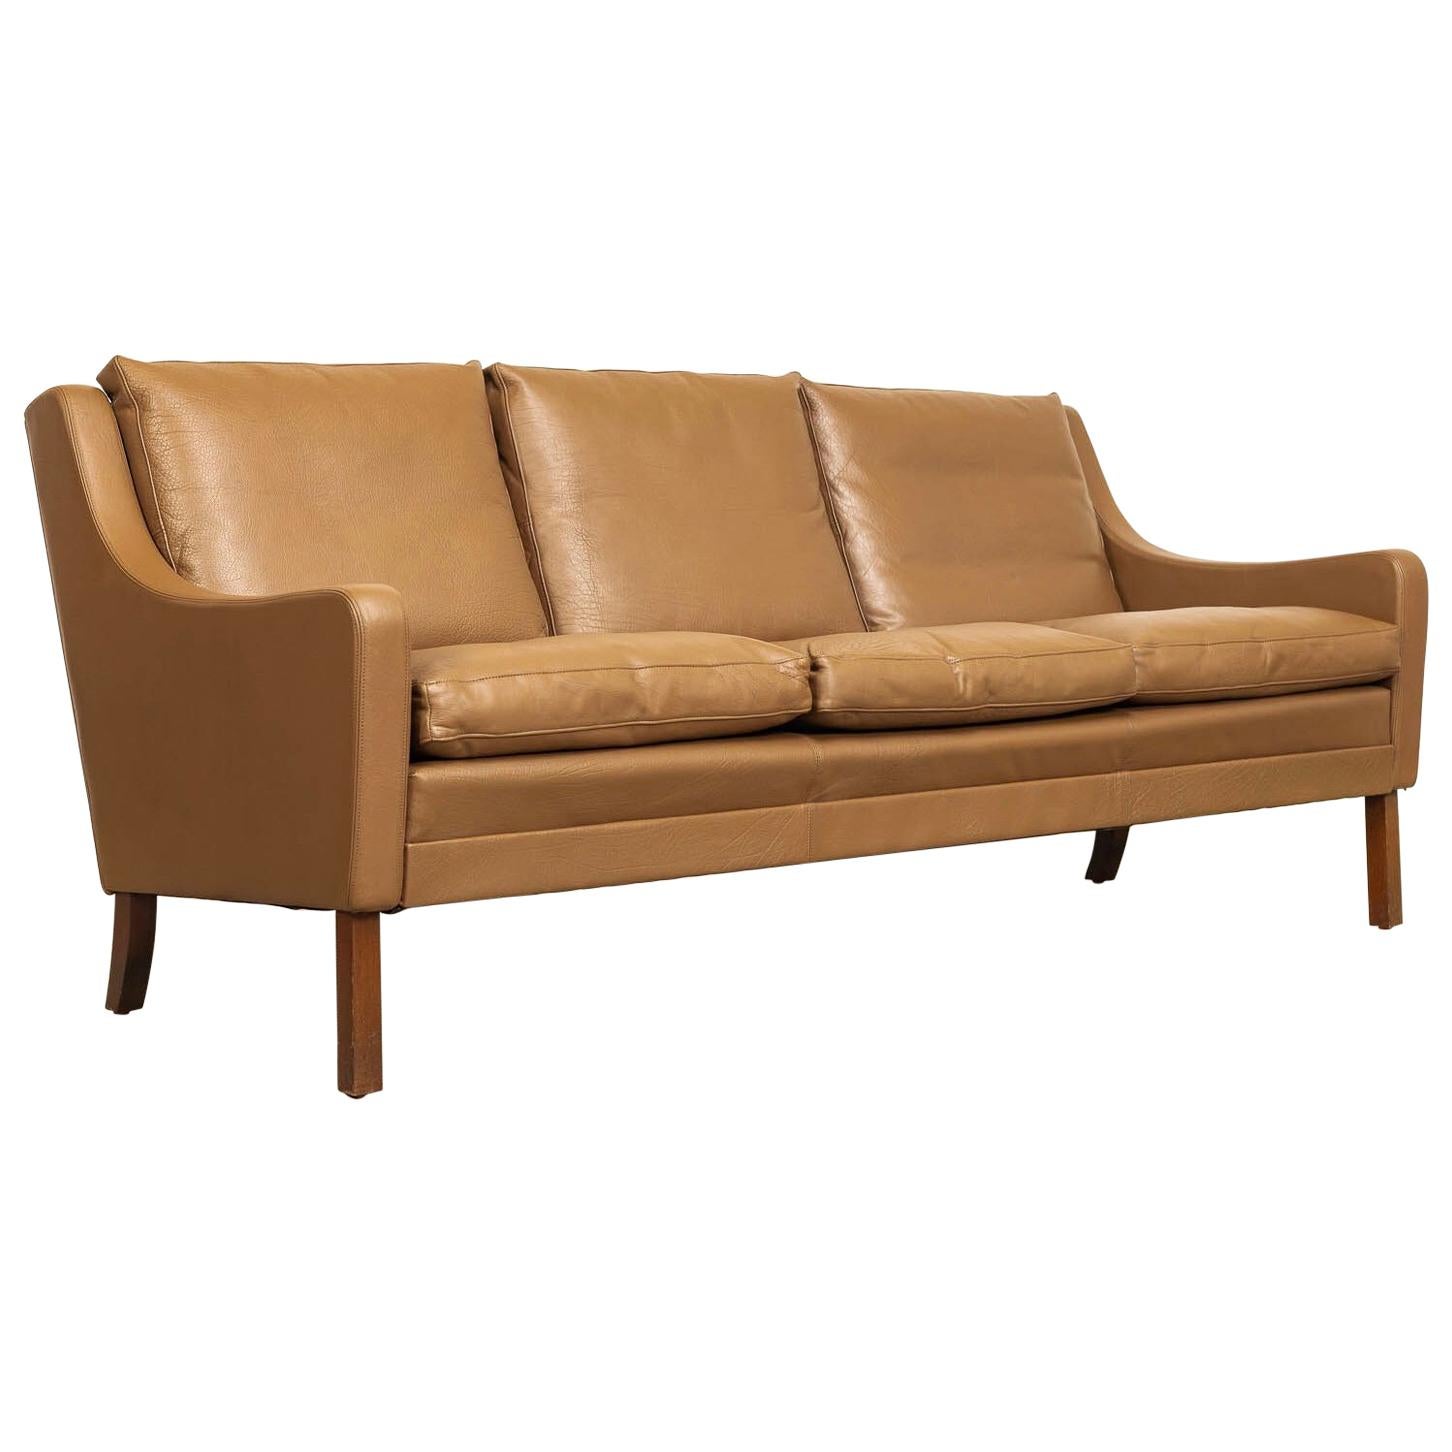 Vintage Midcentury Danish Modern Brown Leather Three-Seat Sofa, 1960s For Sale